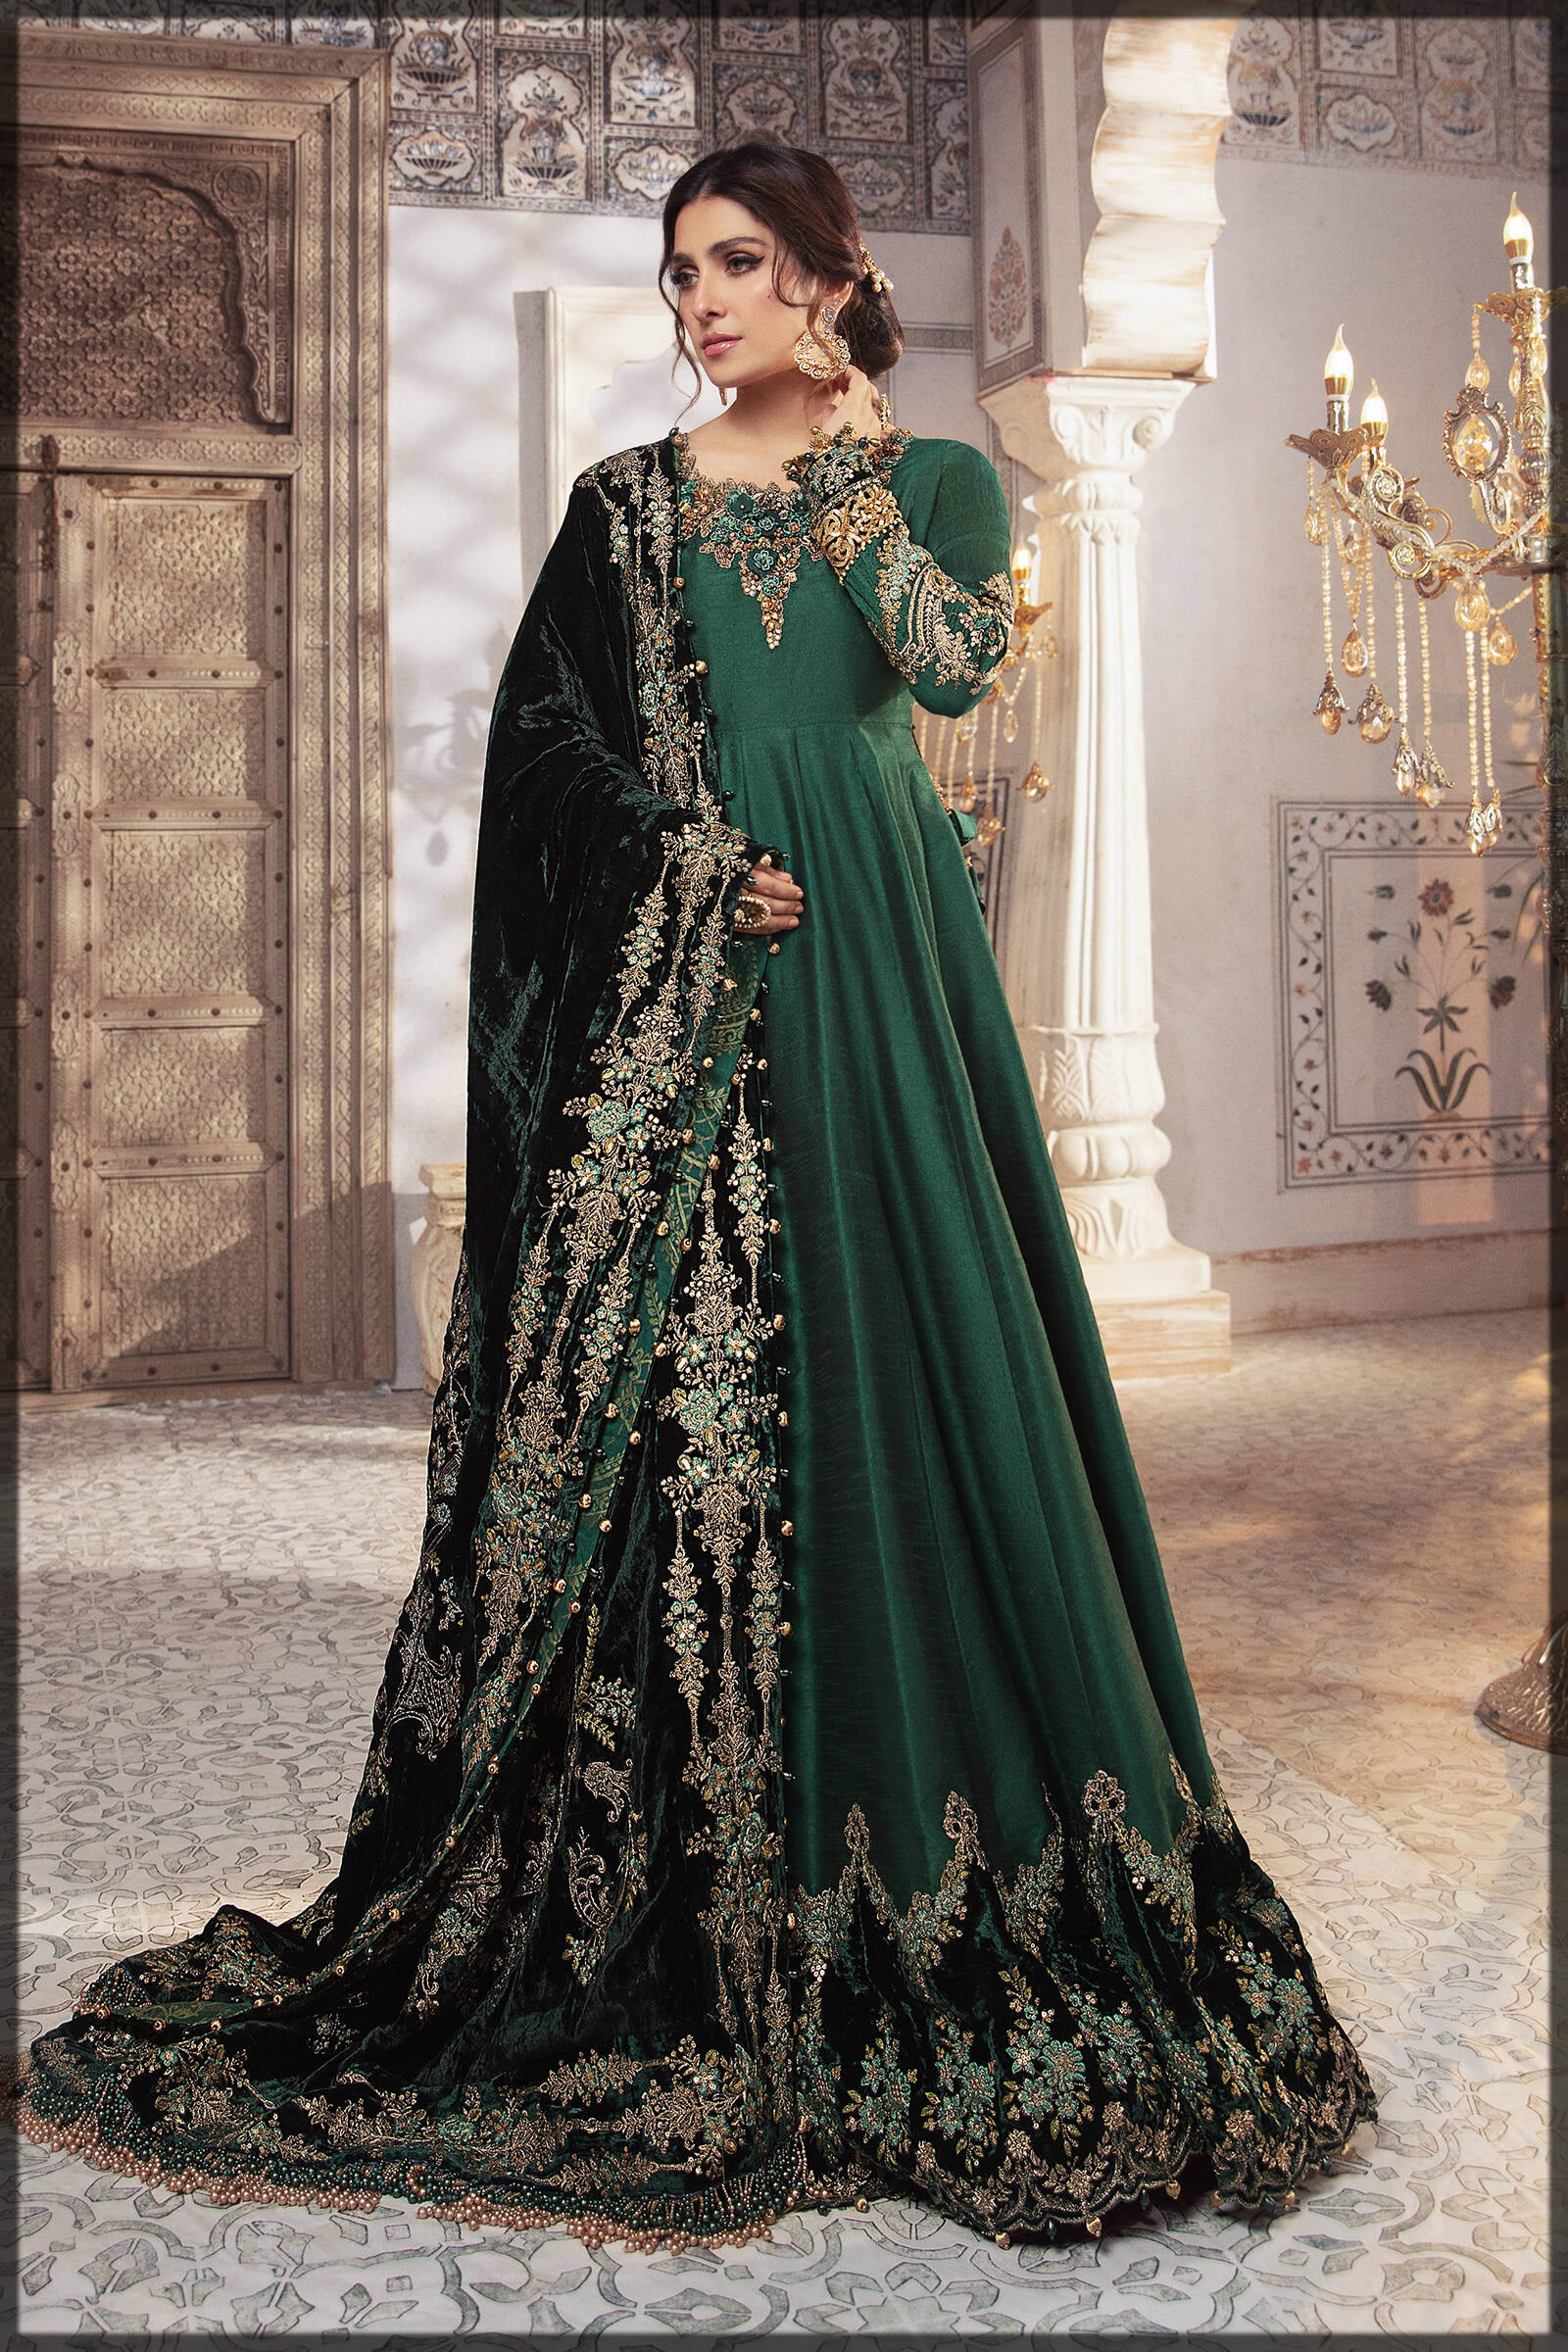 beautiful emerald green embroidered dress